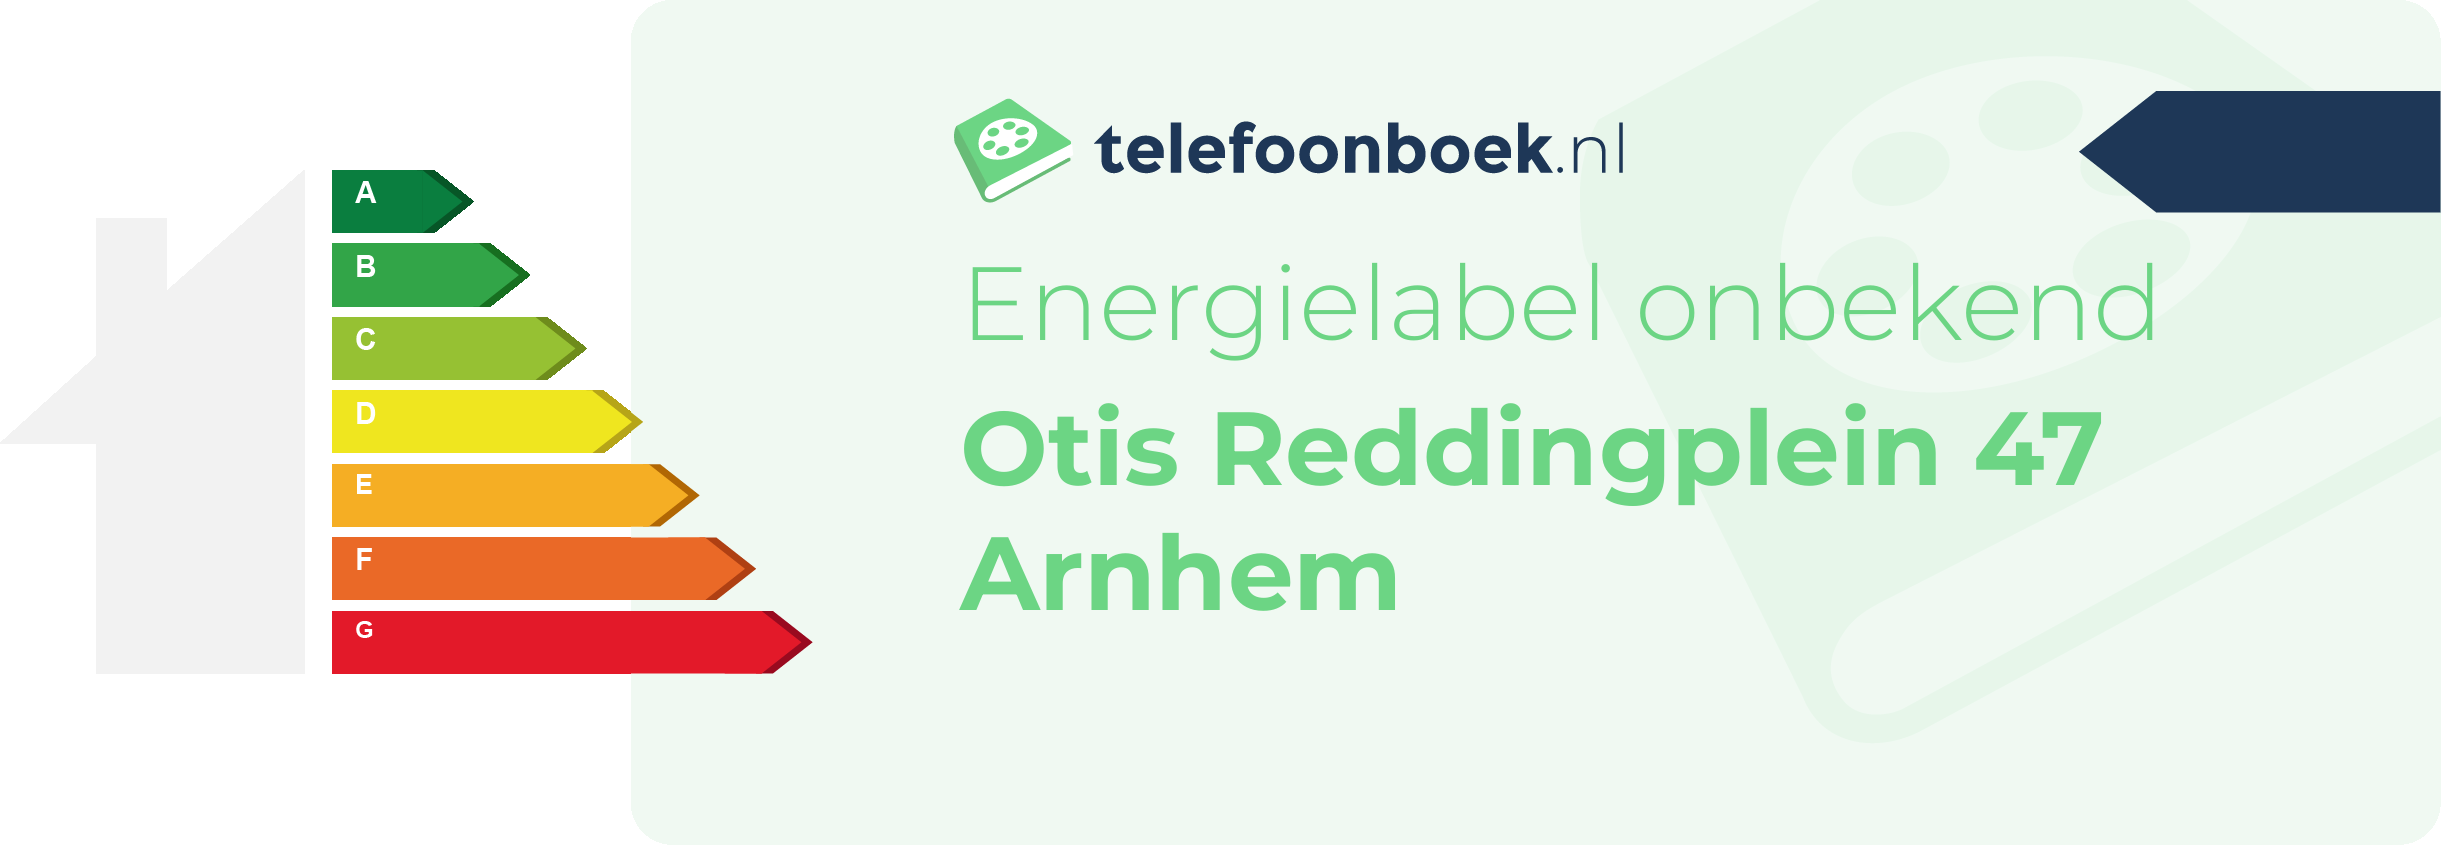 Energielabel Otis Reddingplein 47 Arnhem